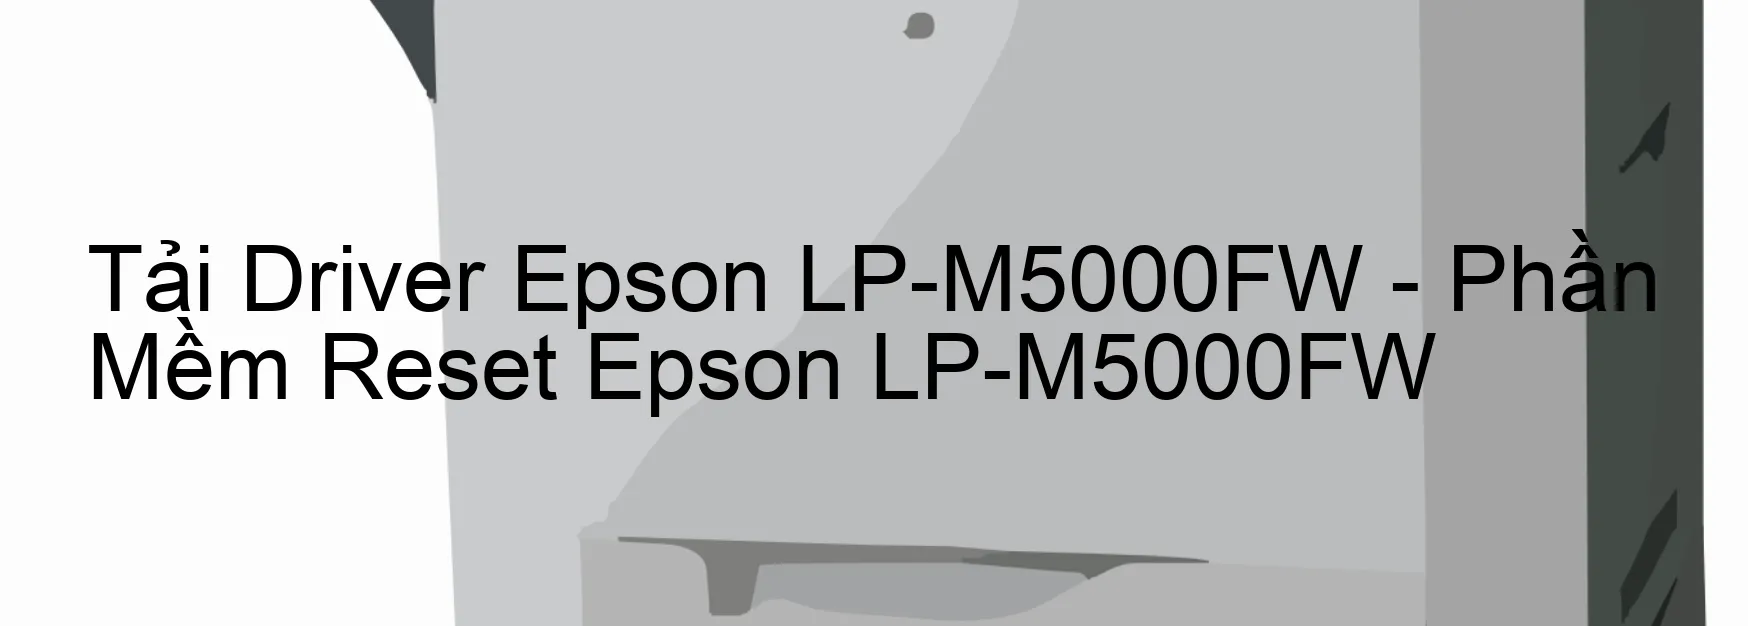 Driver Epson LP-M5000FW, Phần Mềm Reset Epson LP-M5000FW